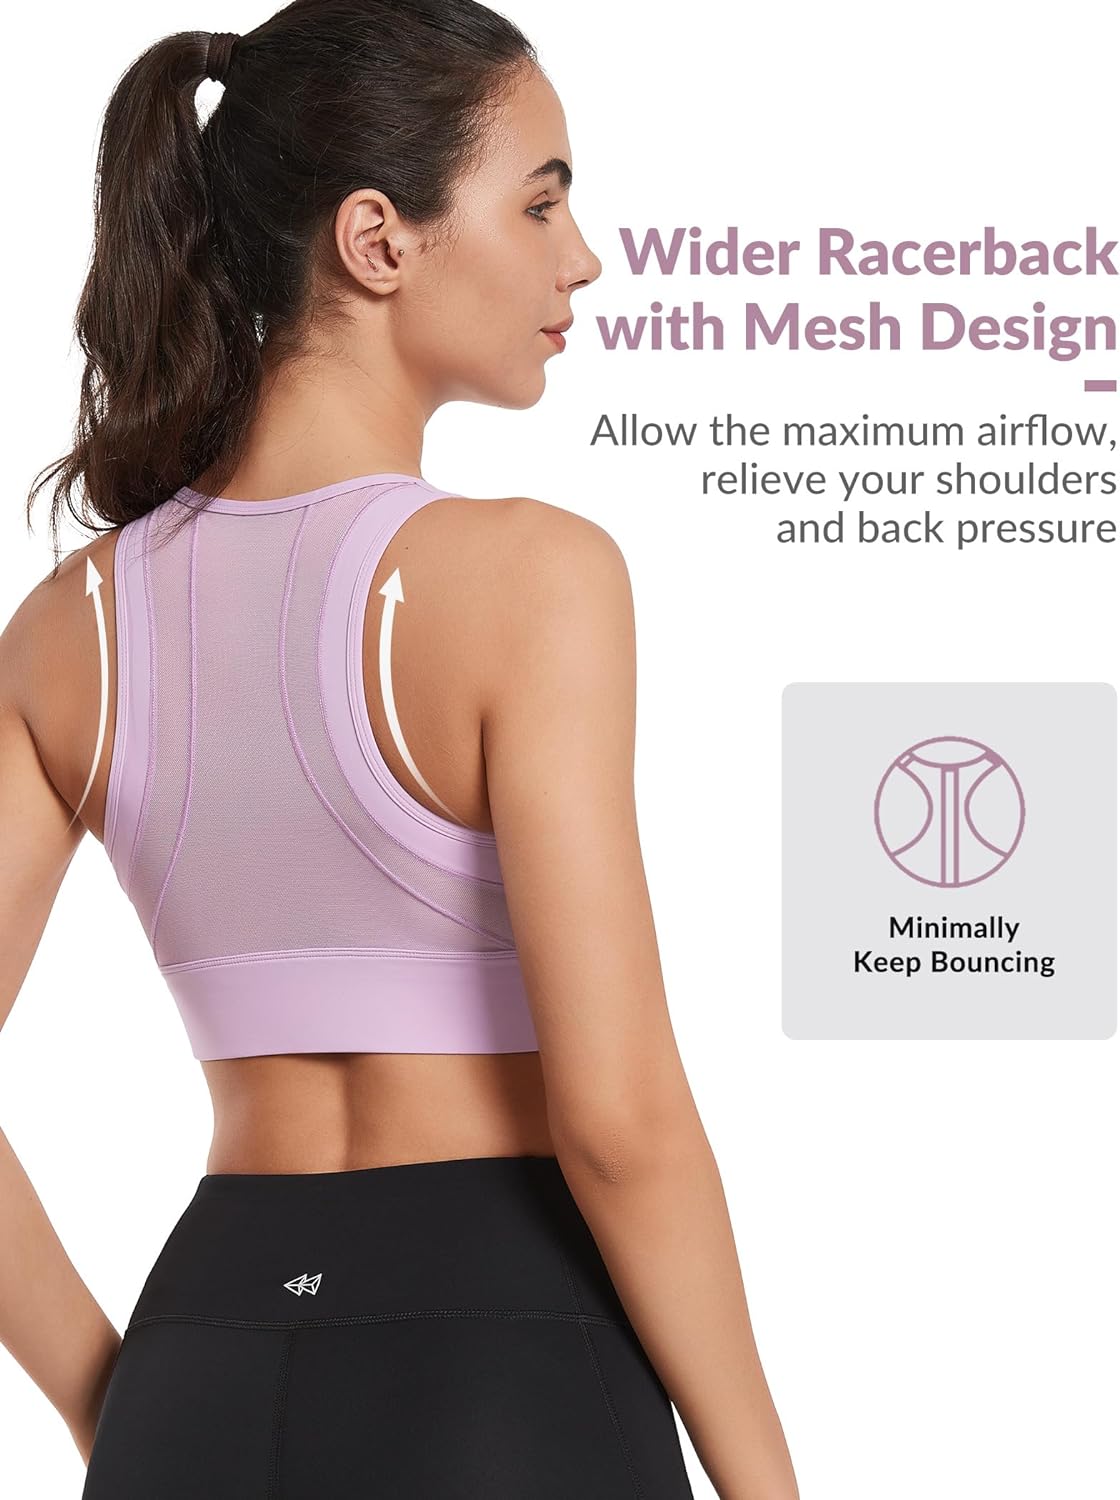 Yvette Women High Impact Sports Bras Plus Size Racerback Workout Bra for Large  Bust Running Fitness,Pink,Medium 